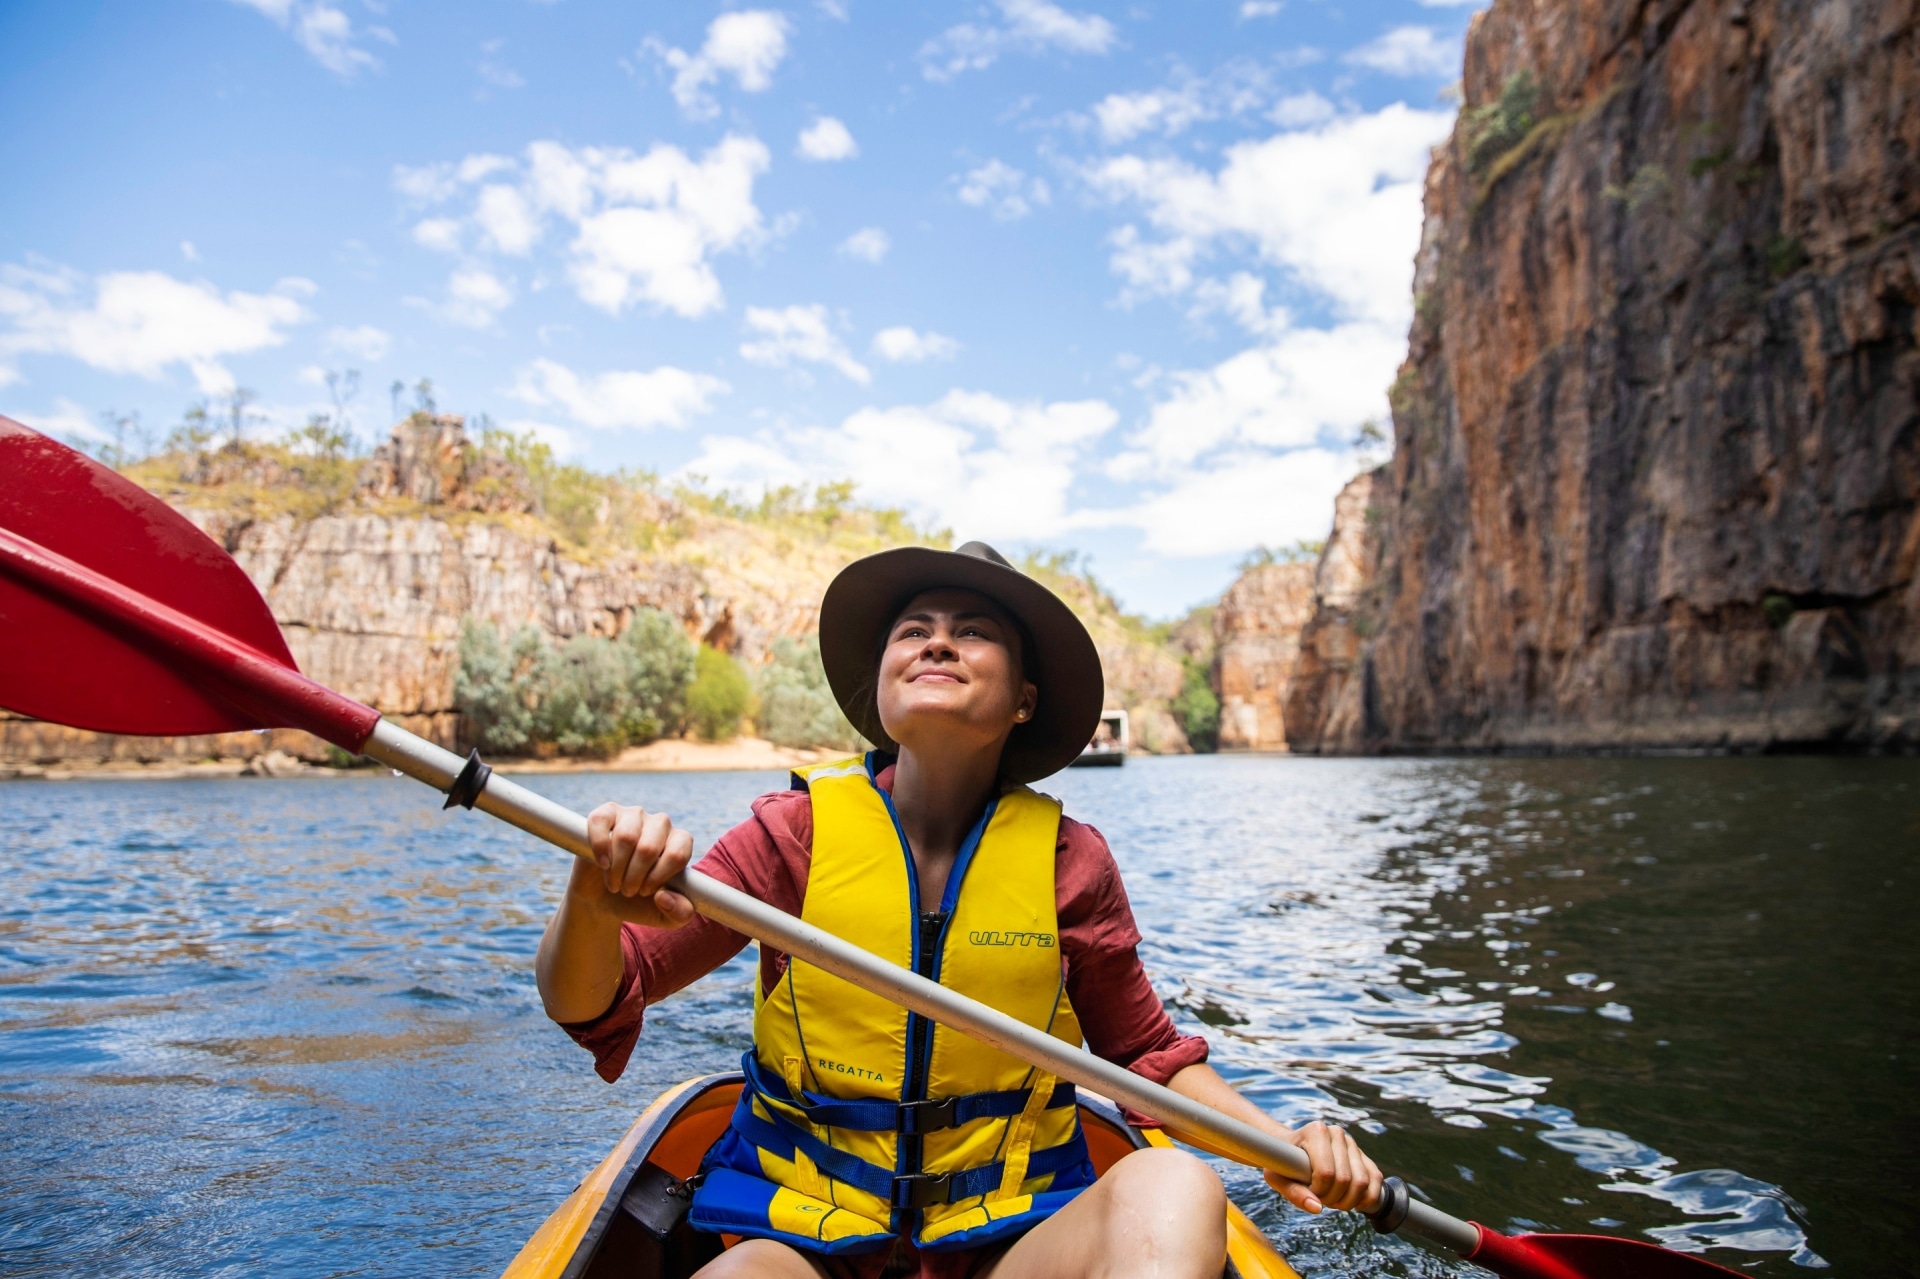 Canoeing, Nitmiluk, Northern Territory © Tourism NT/Helen Orr